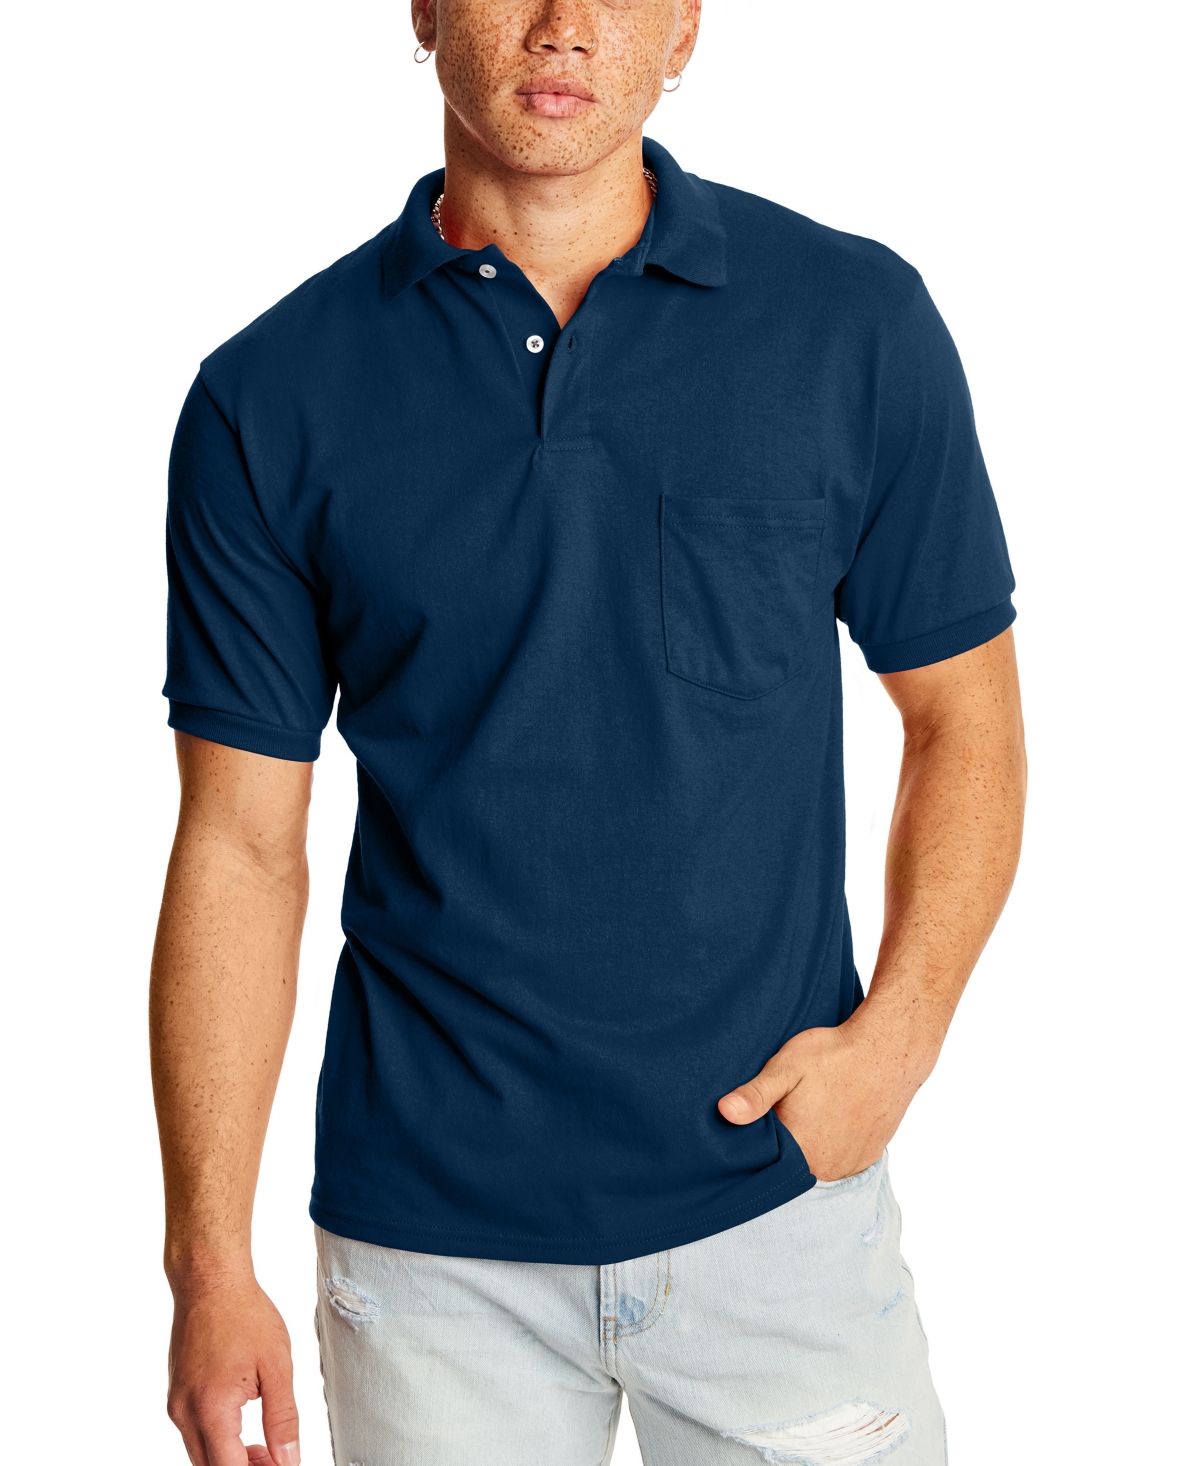 Hanes Ecosmart Men's Pocket Polo Shirt, 2-pack In Navy